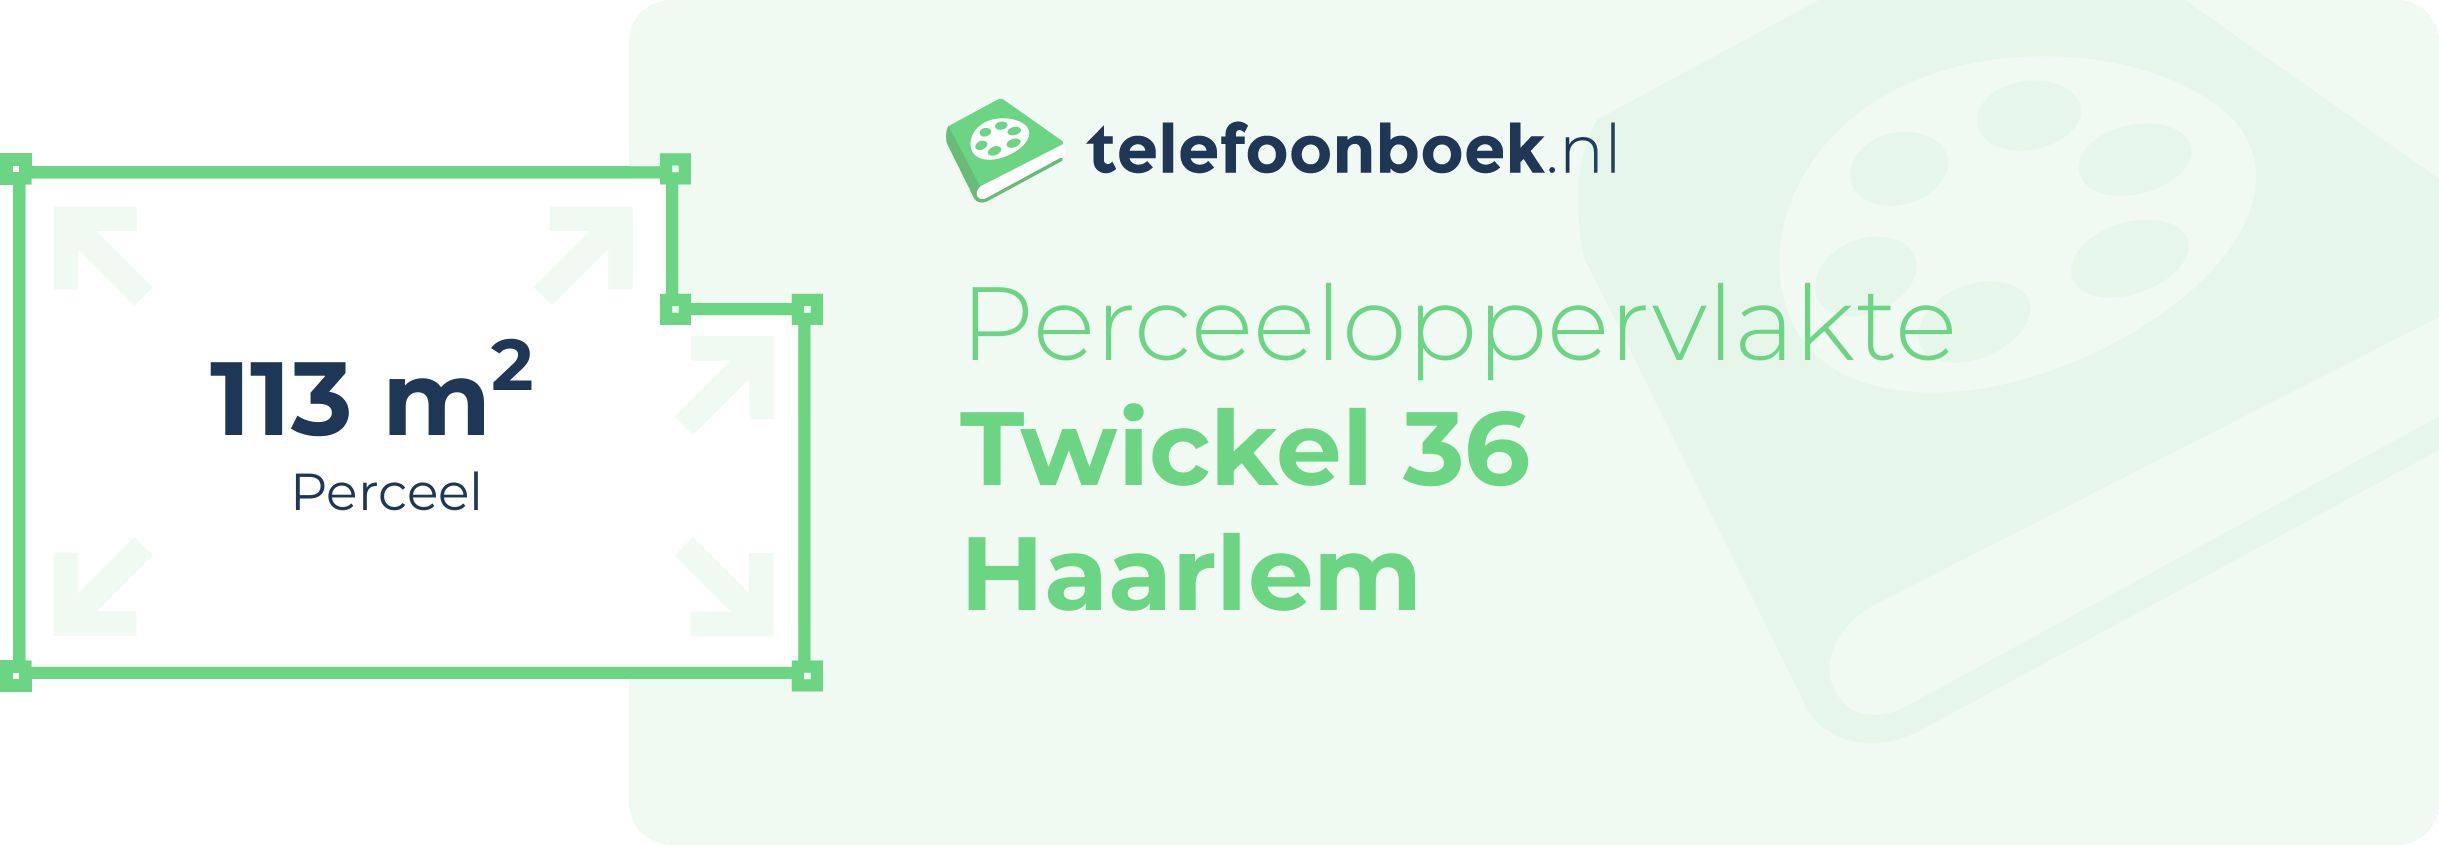 Perceeloppervlakte Twickel 36 Haarlem